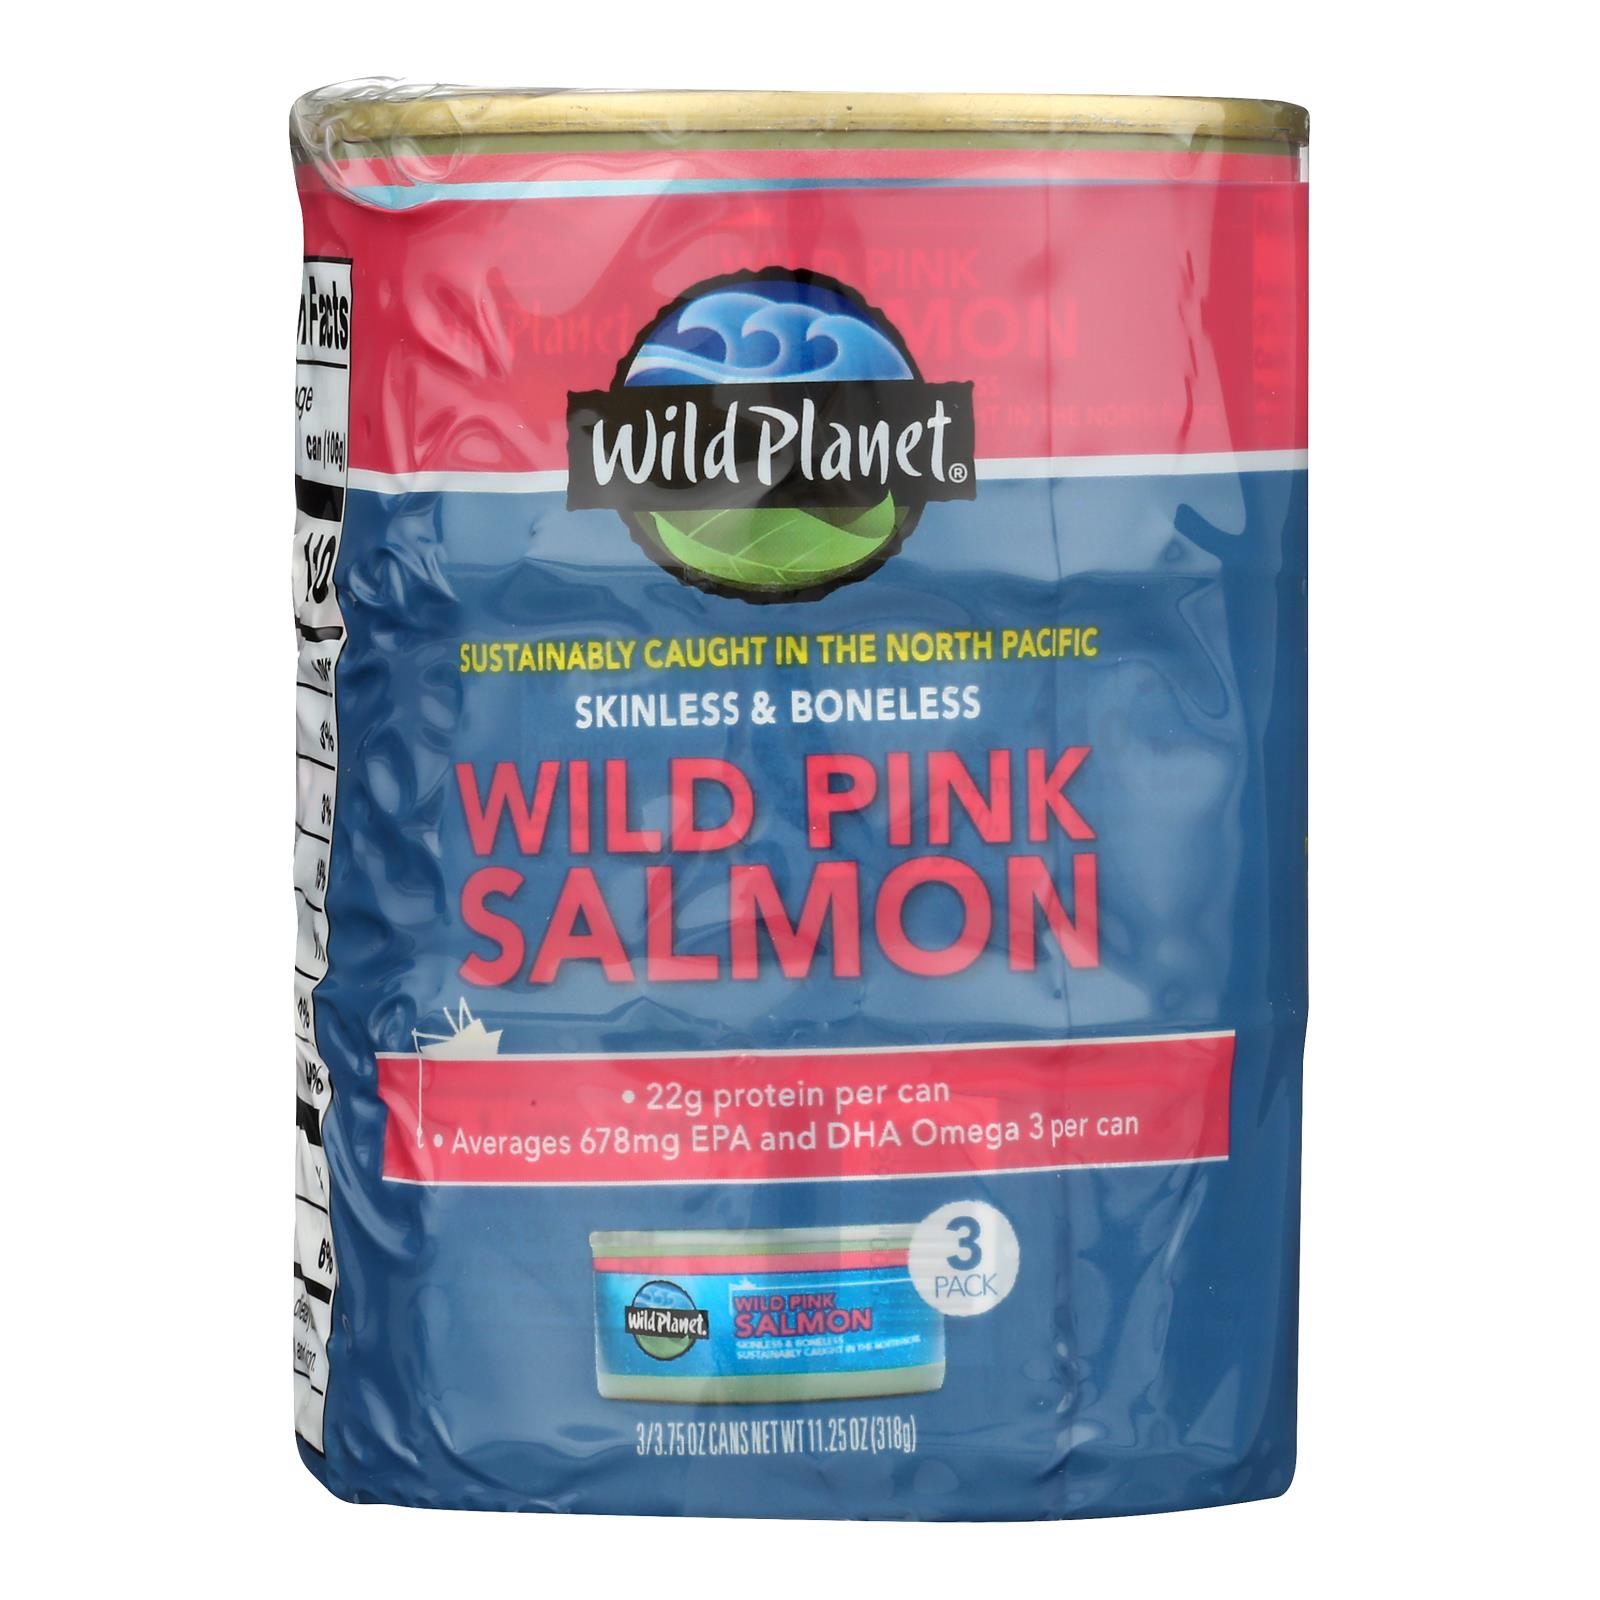 Wild Planet - Wild Pink Salmon Boneless Skinless - Case of 12 - 3.75 oz